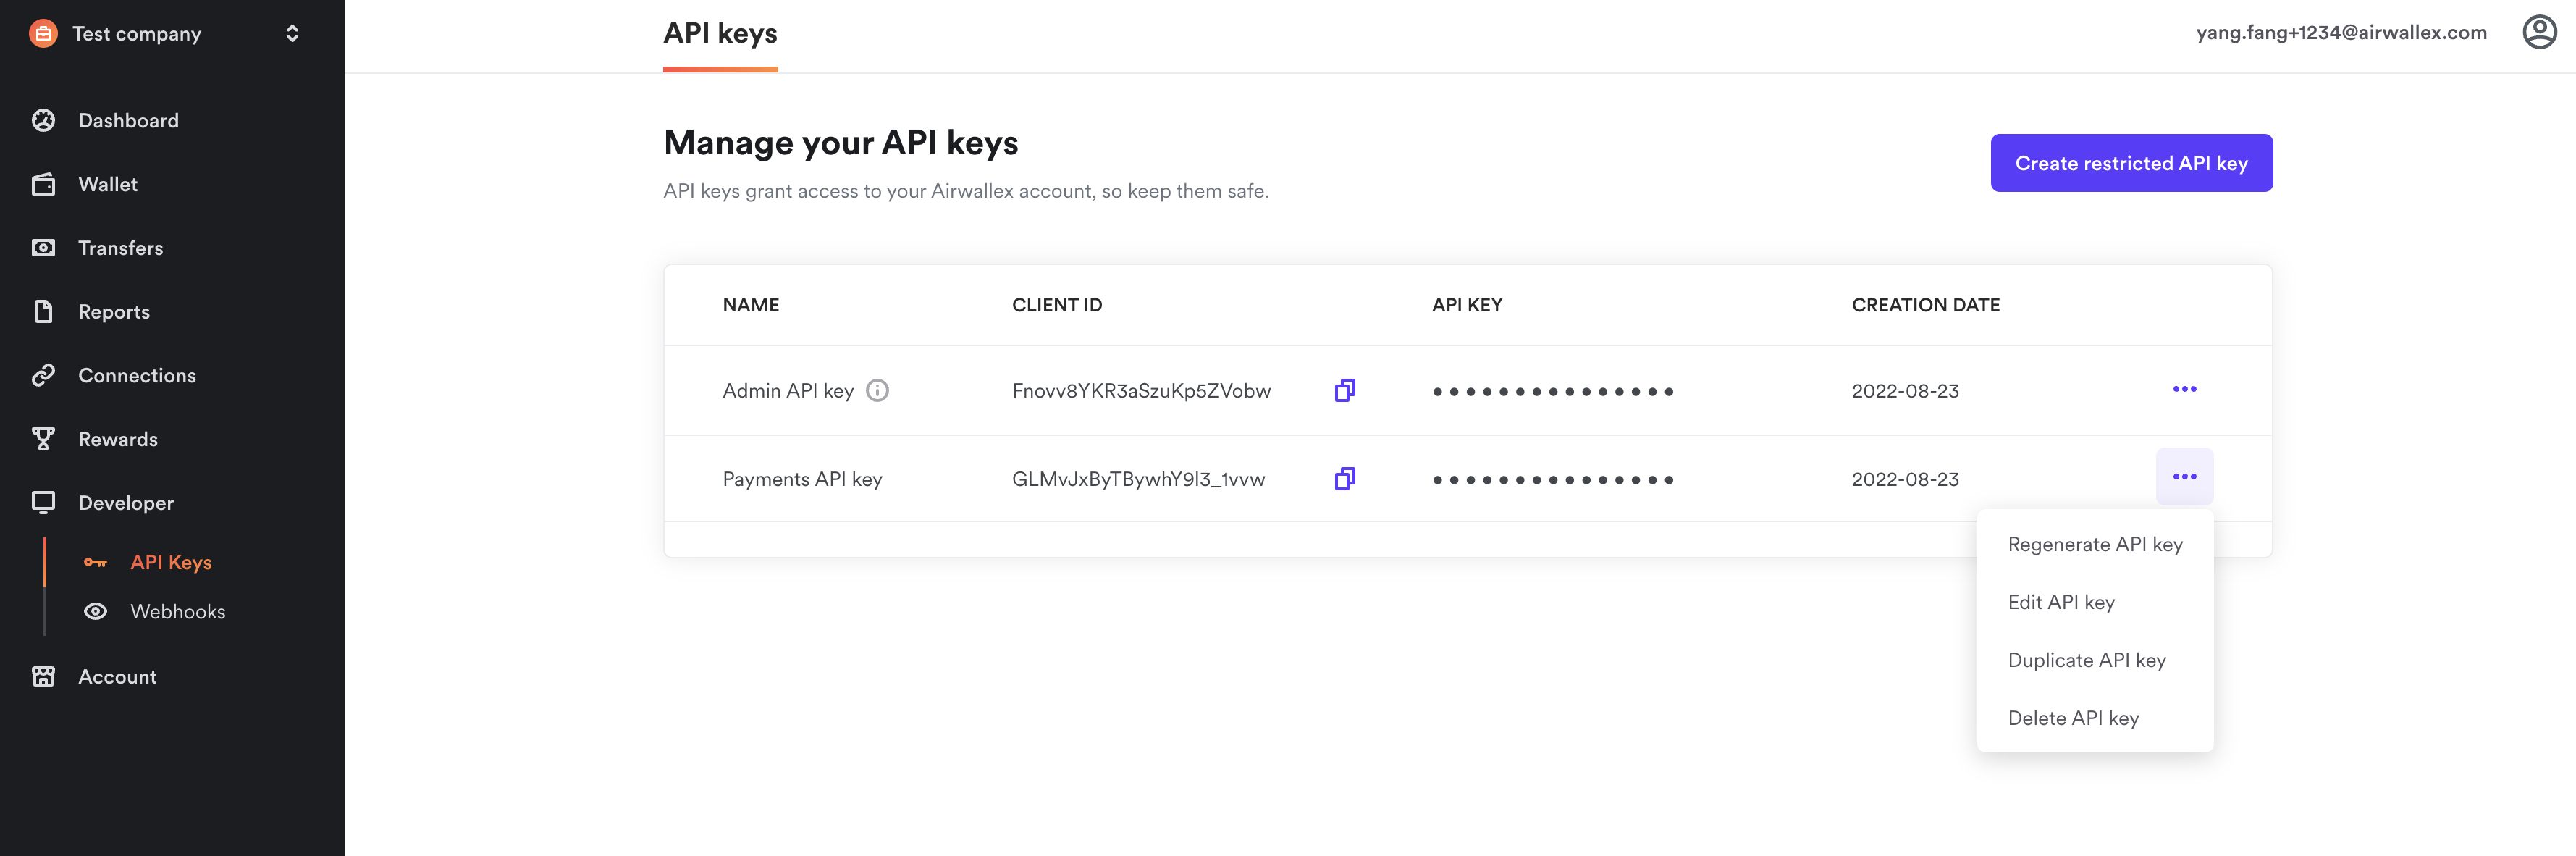 Edit restricted API key